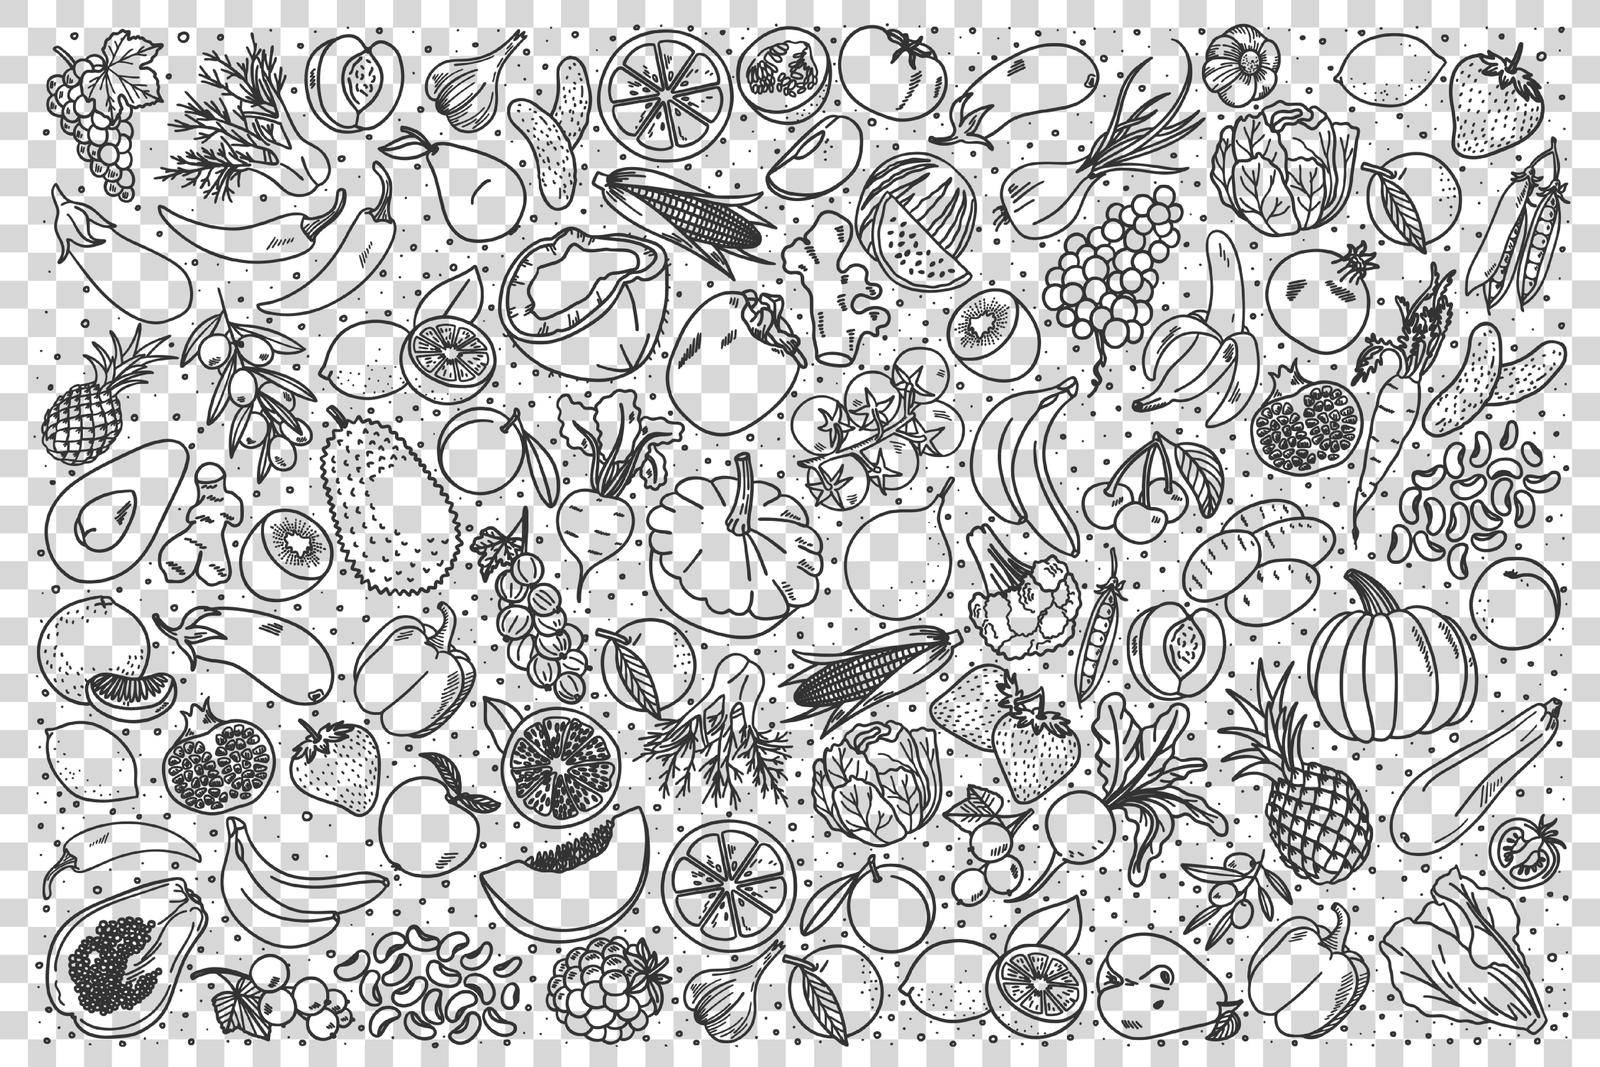 Vegan doodle set. Collection of hand drawn sketches templates patterns of vegans dieting meal natural vegetarian nutrition smoothie cocktail cereals vegetables fruits. Healthy lifestyle illustration.